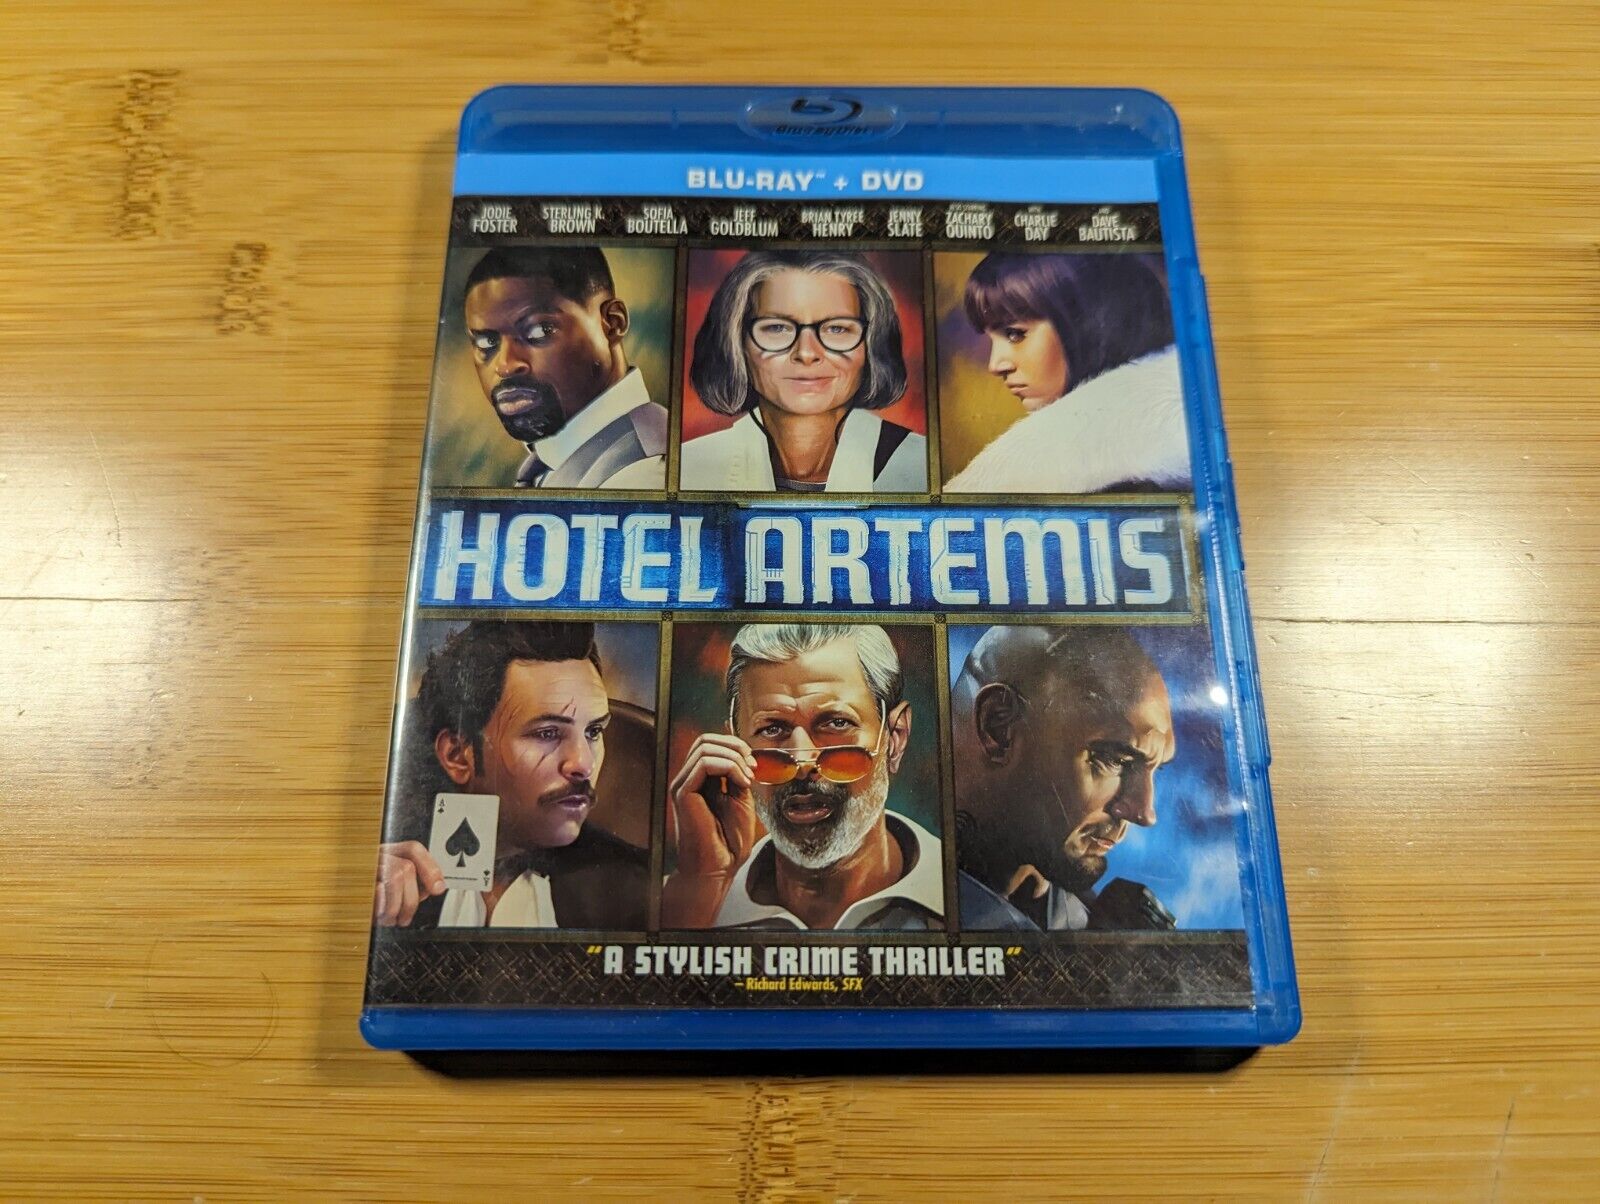 Hotel Artemis [Blu-ray + DVD] RARE Crime Thriller Goldblum Day Foster Bautista